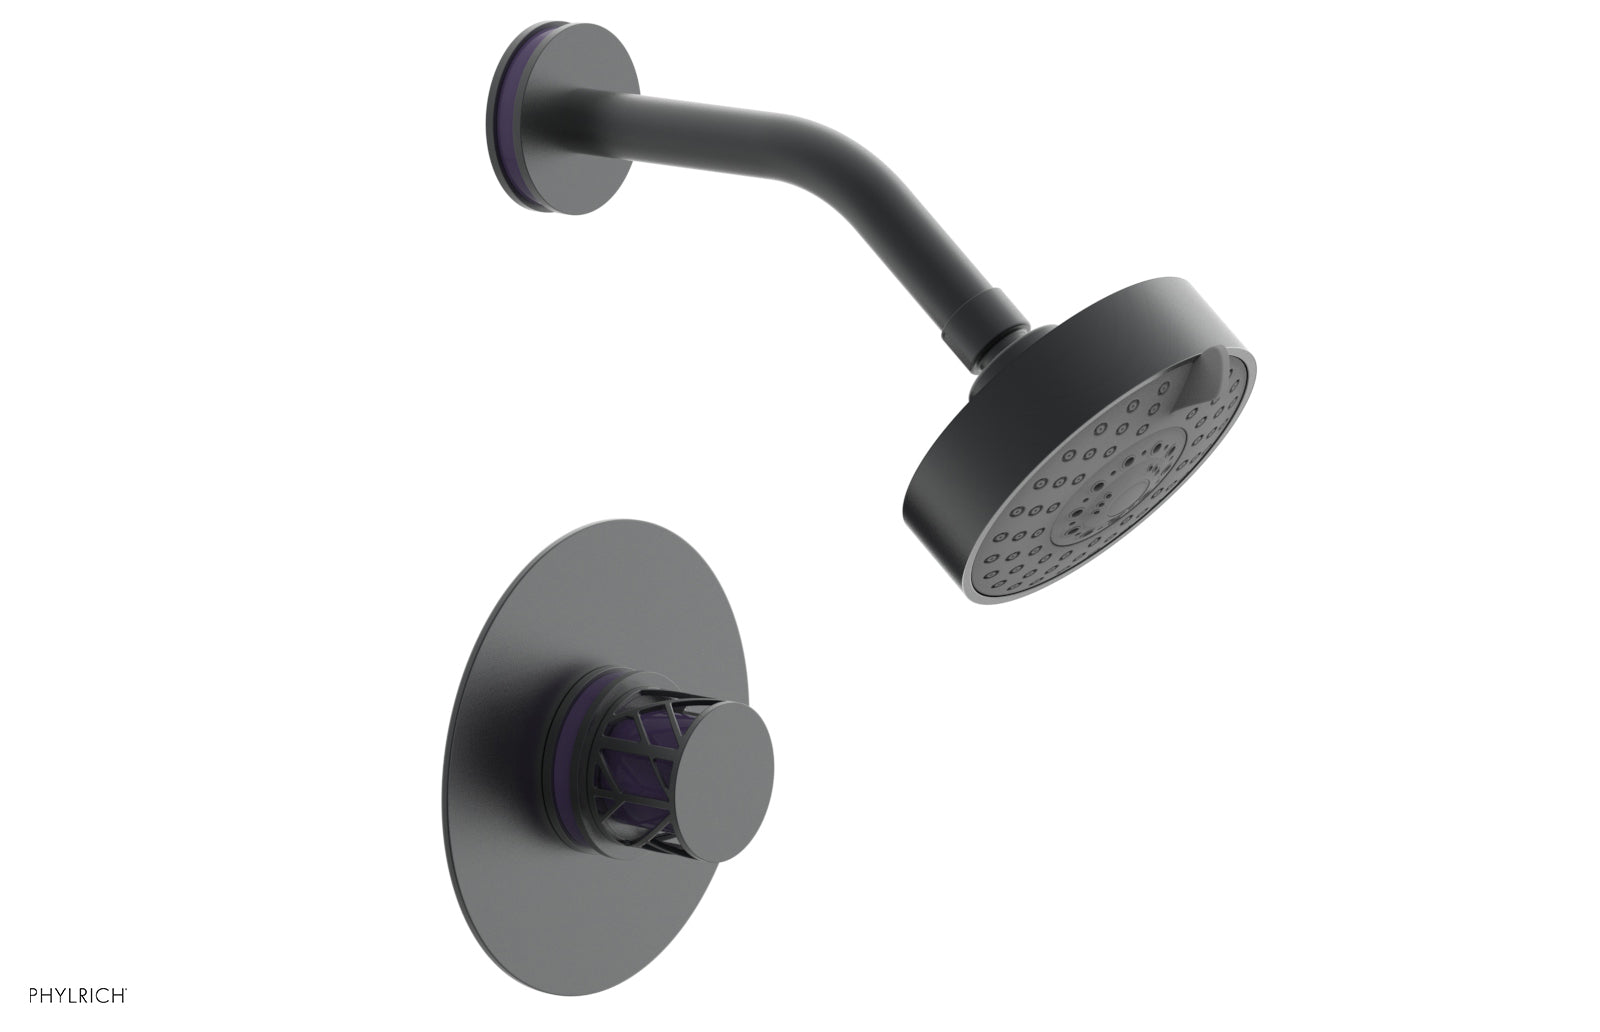 Phylrich JOLIE Pressure Balance Shower Set - Round Handle with "Purple" Accents